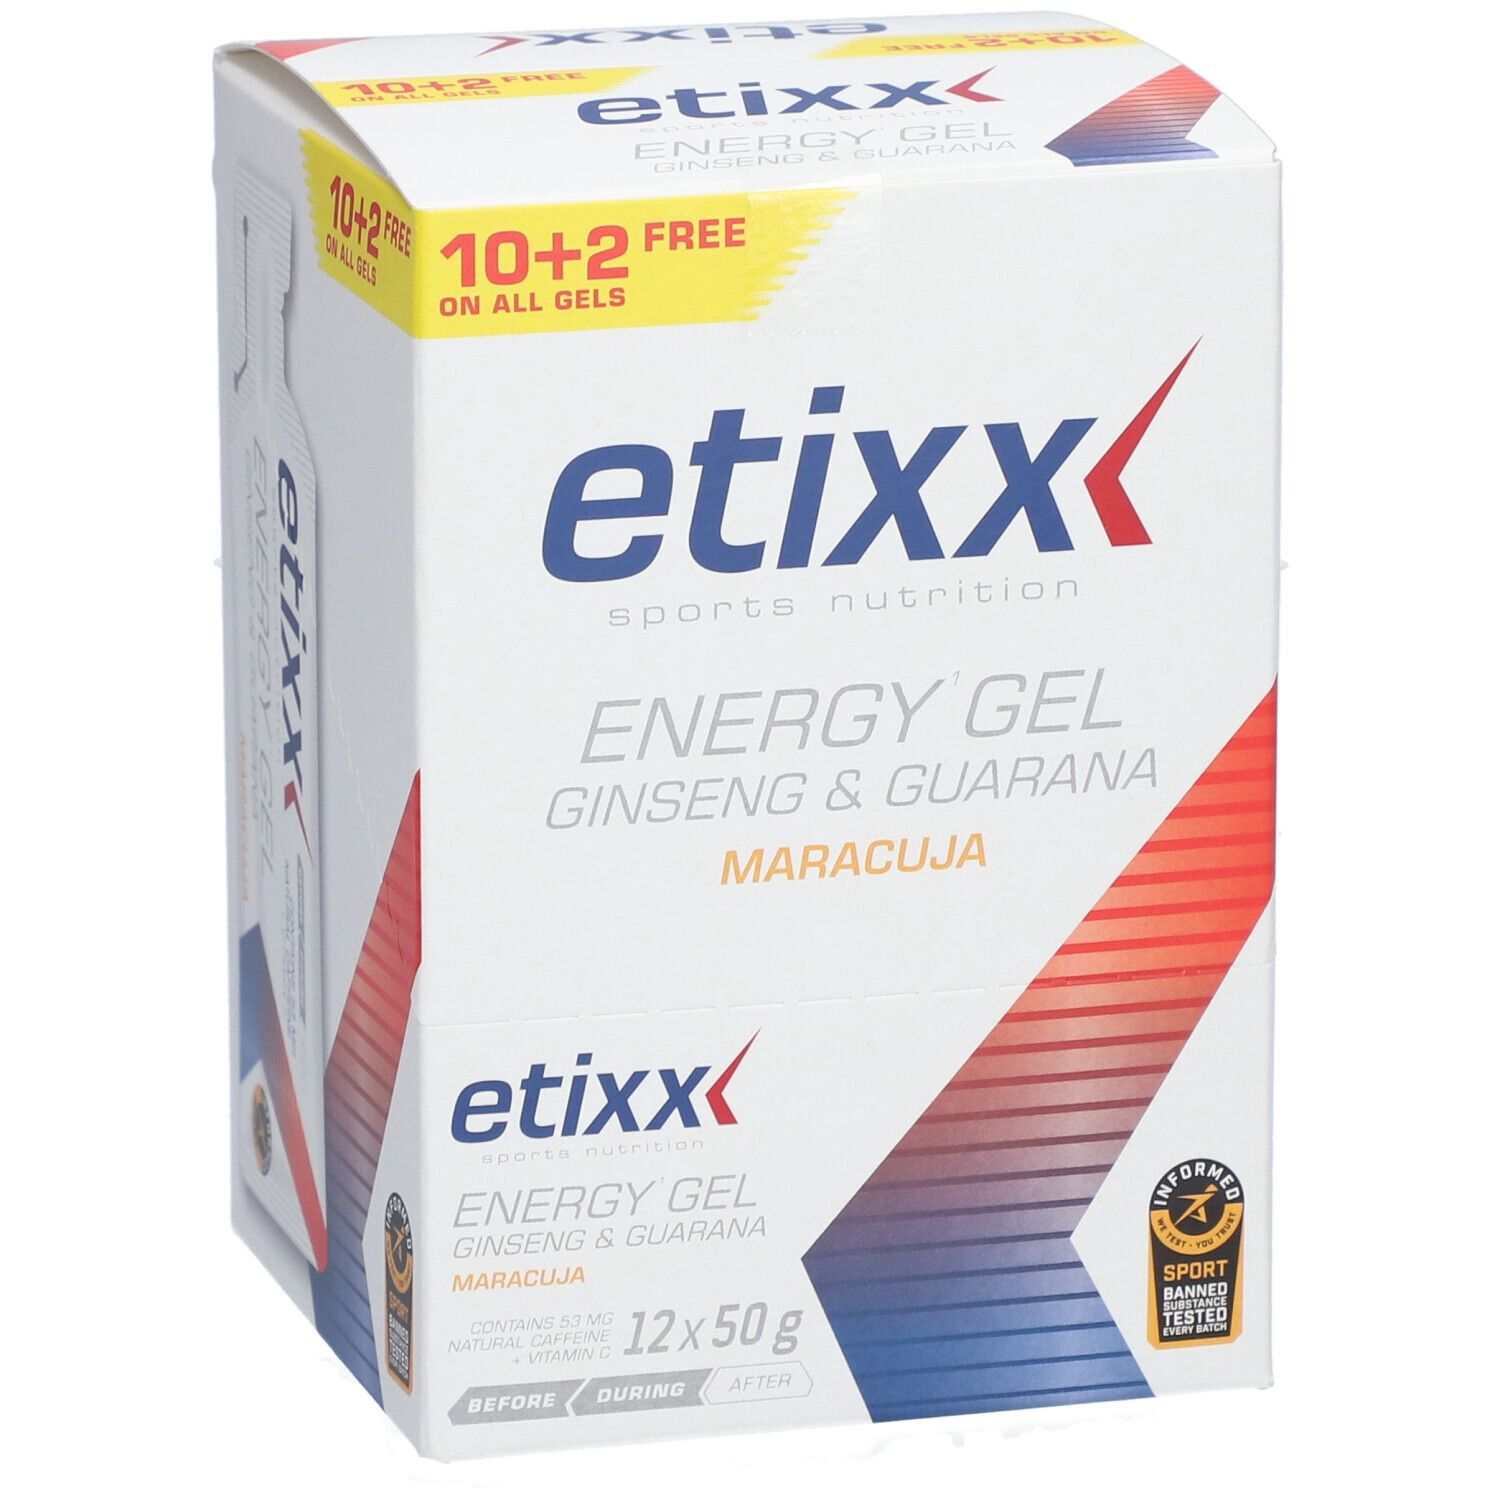 Etixx Ginseng & Guarana Energy Gel Maracuja